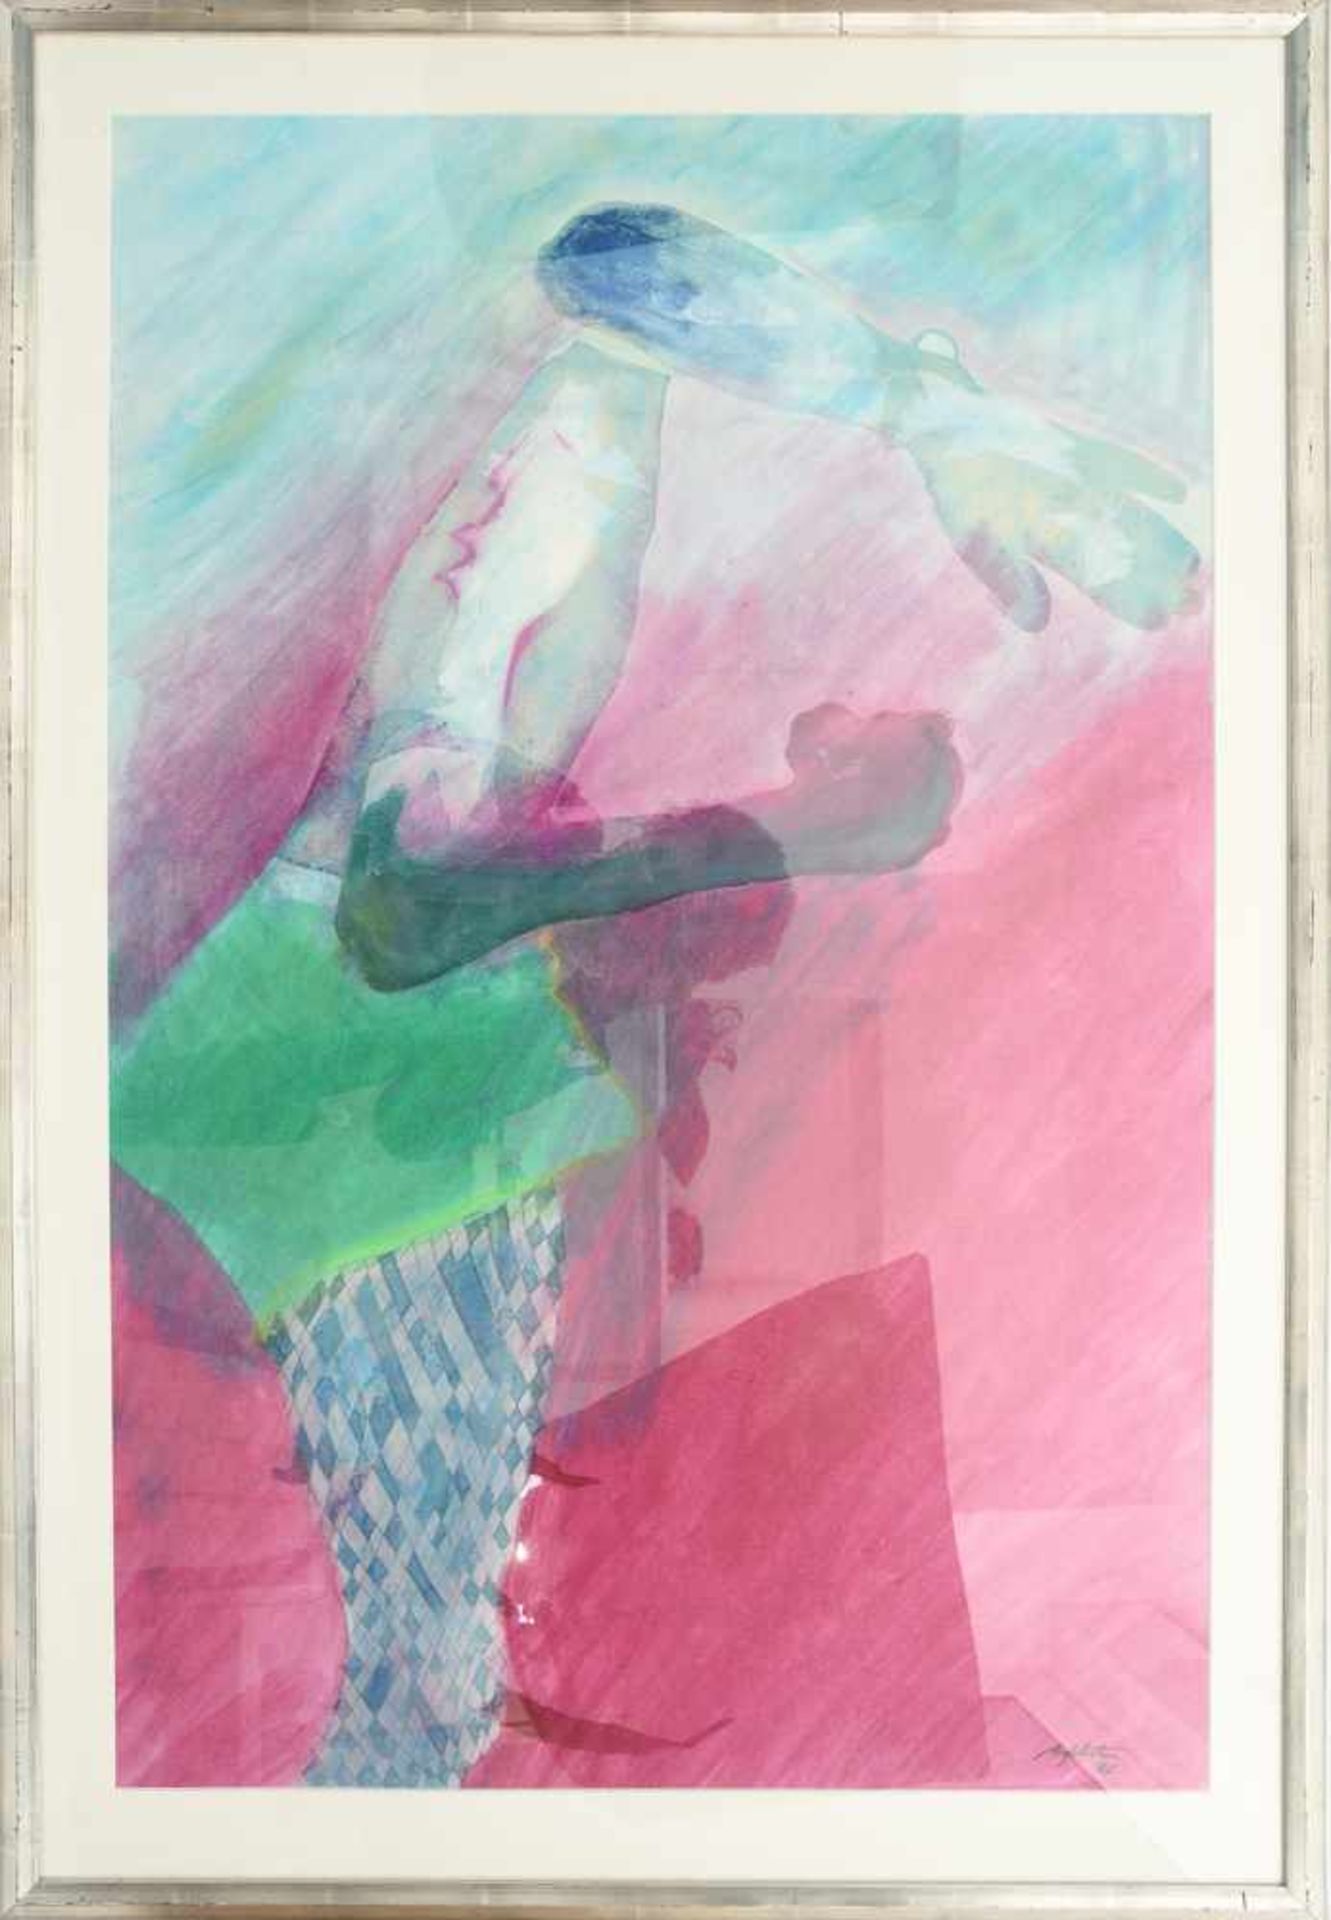 MANUEL BAPTISTA, "Surreale Figur mit Handkopf", Aquarell/Mischtechnik auf Papier, hinter Glas in